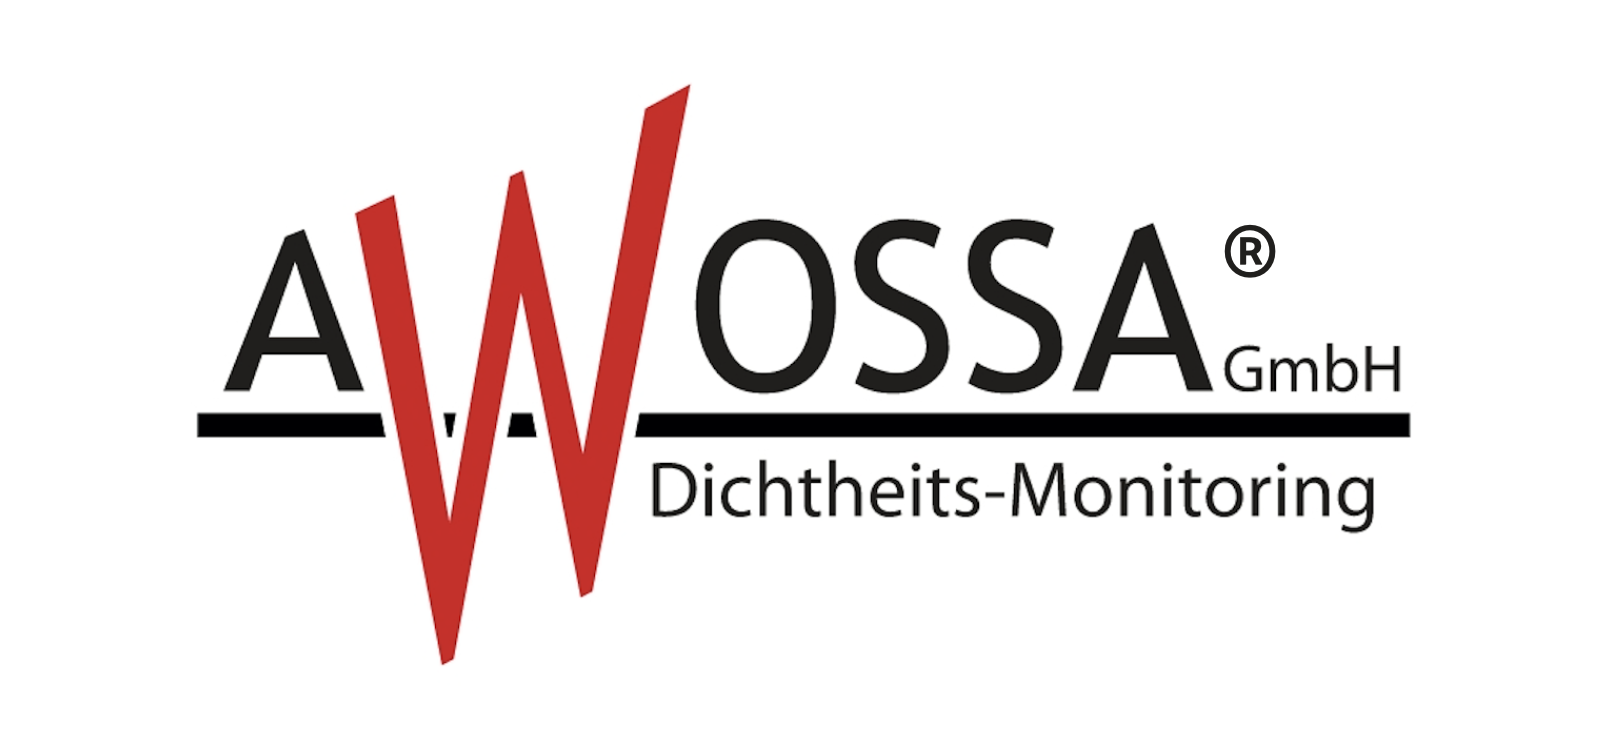 AWOSSA® | Dichtheits-Monitoring